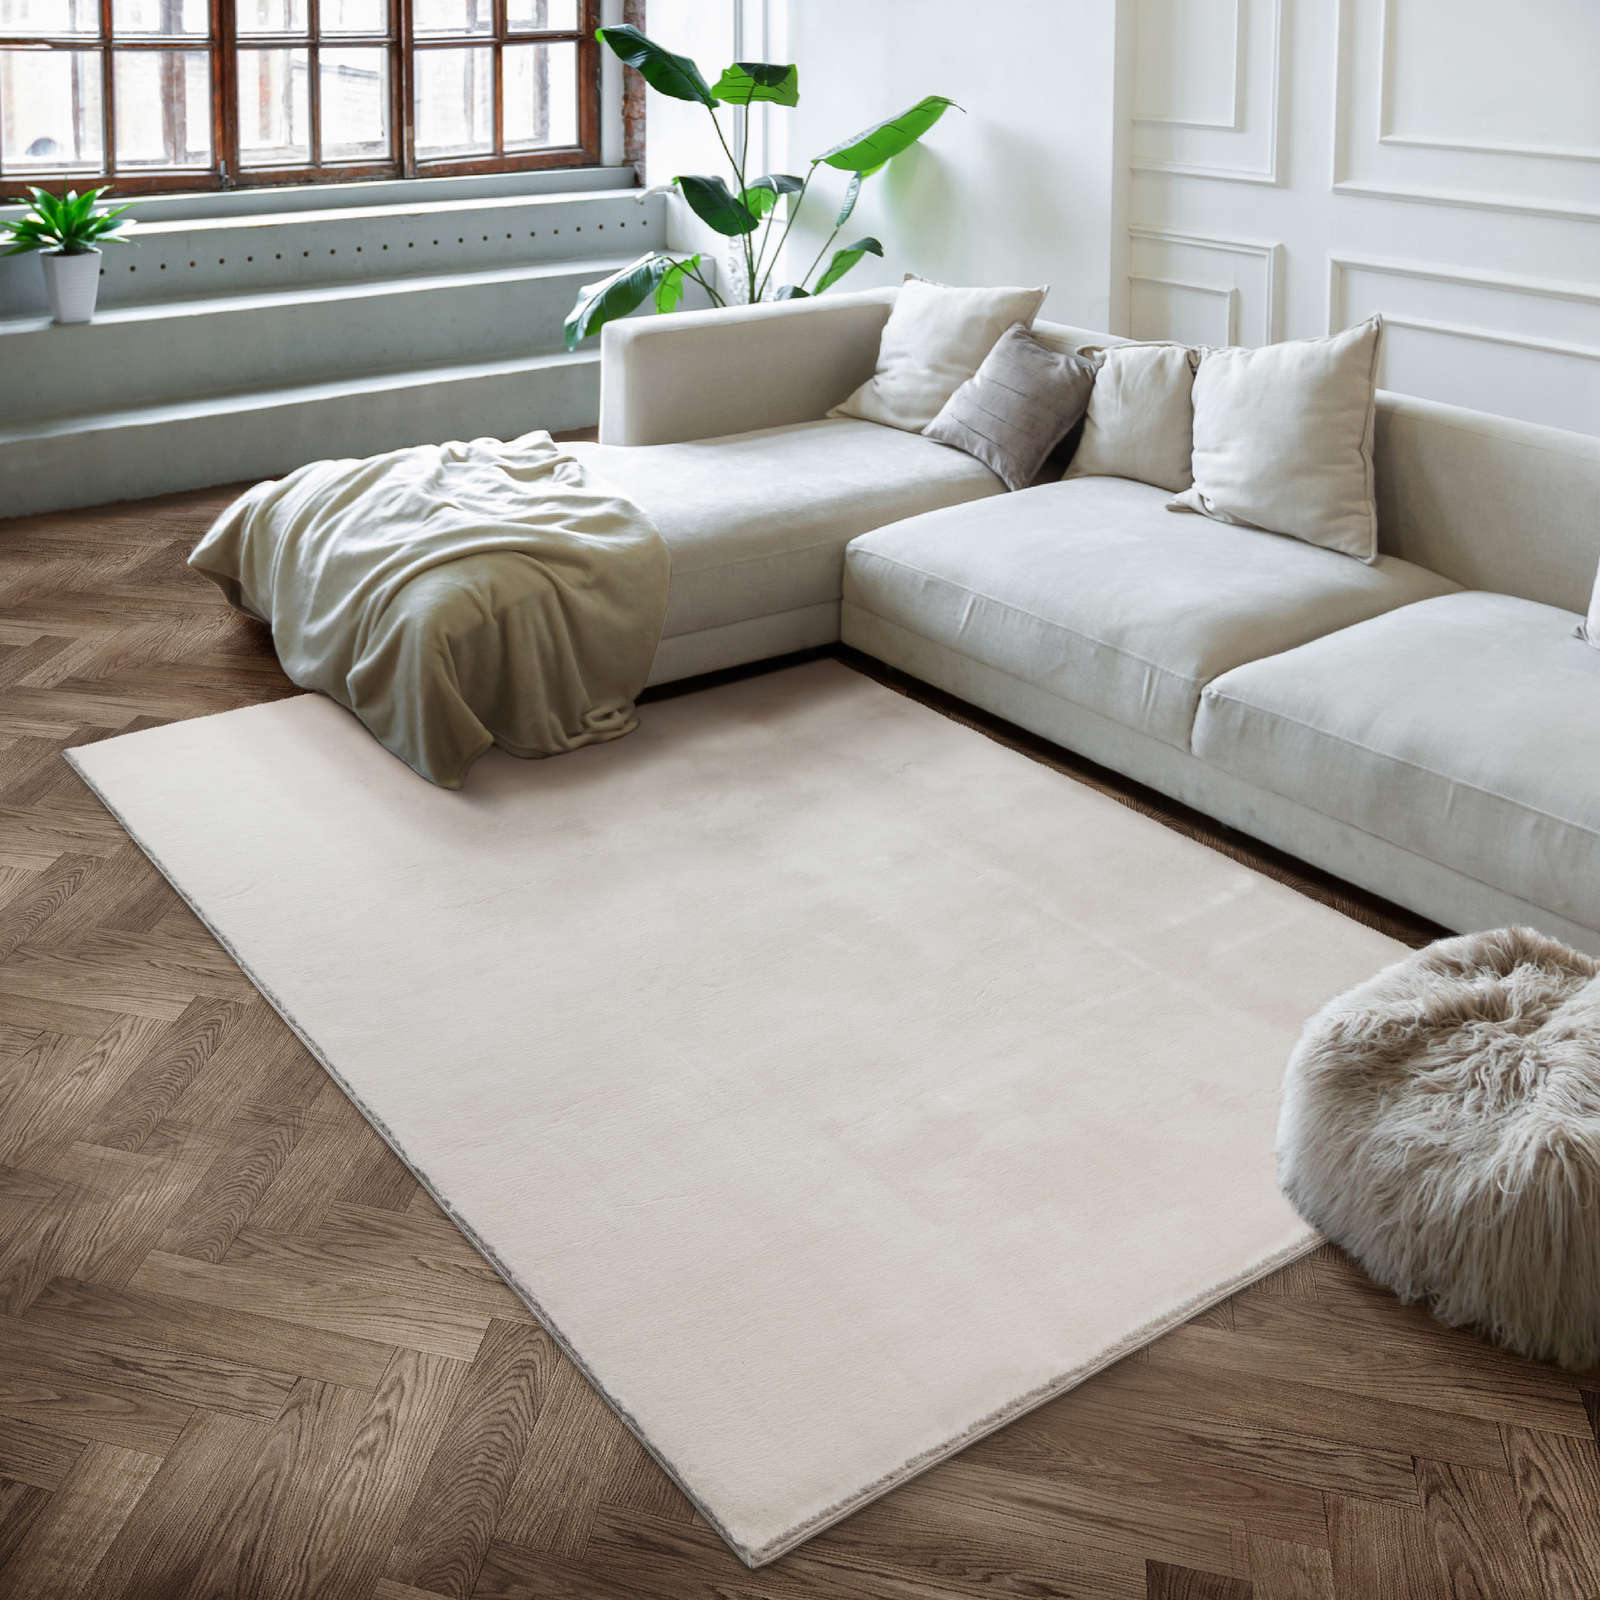             Cuddly soft high pile carpet in light beige - 290 x 200 cm
        